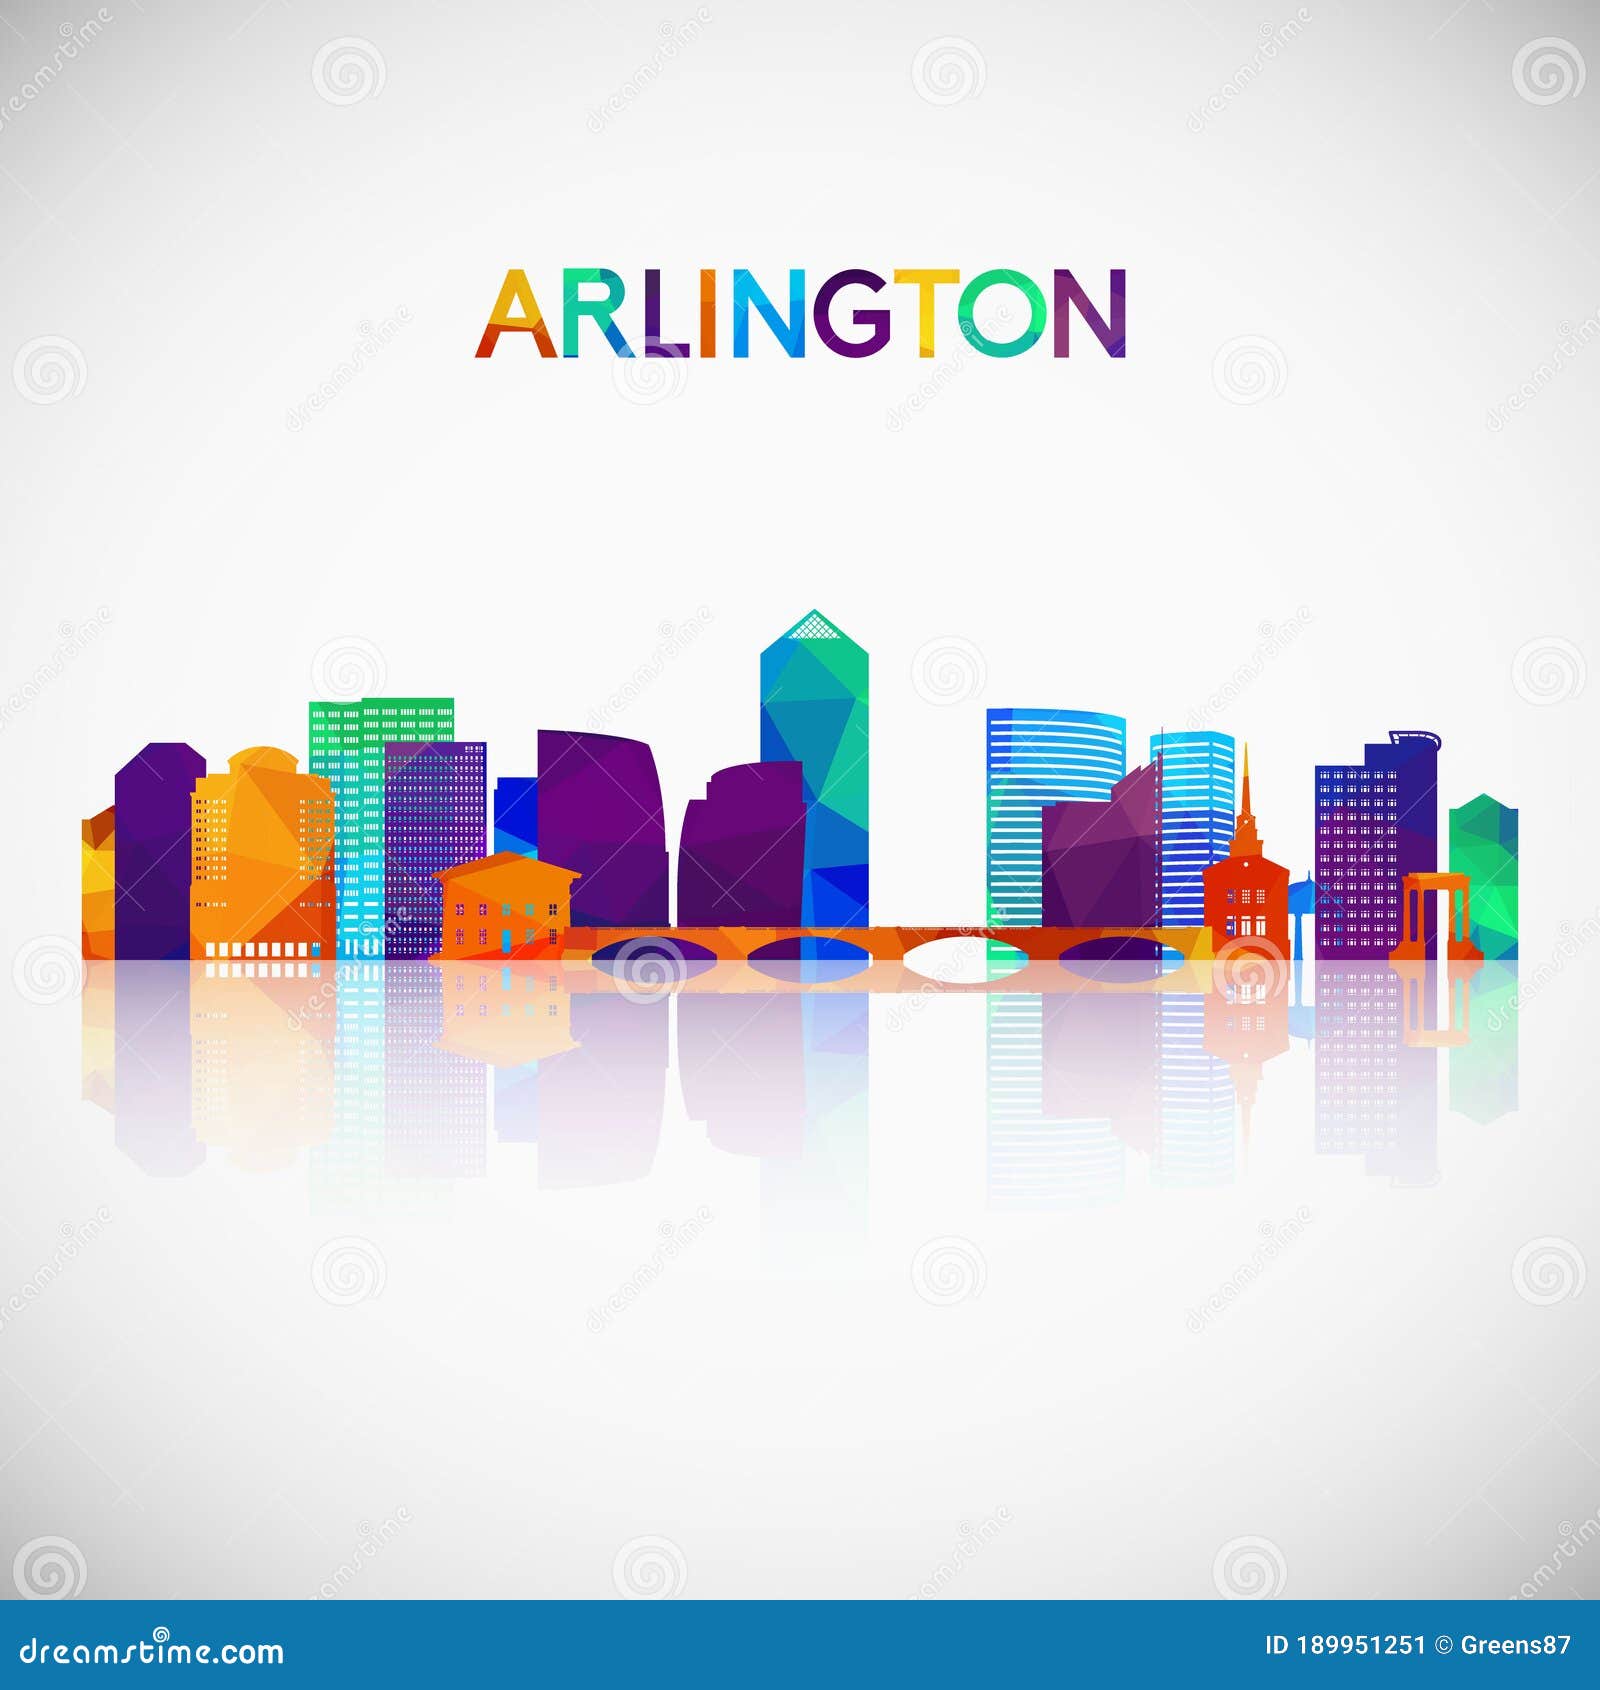 arlington, virginia skyline silhouette in colorful geometric style.